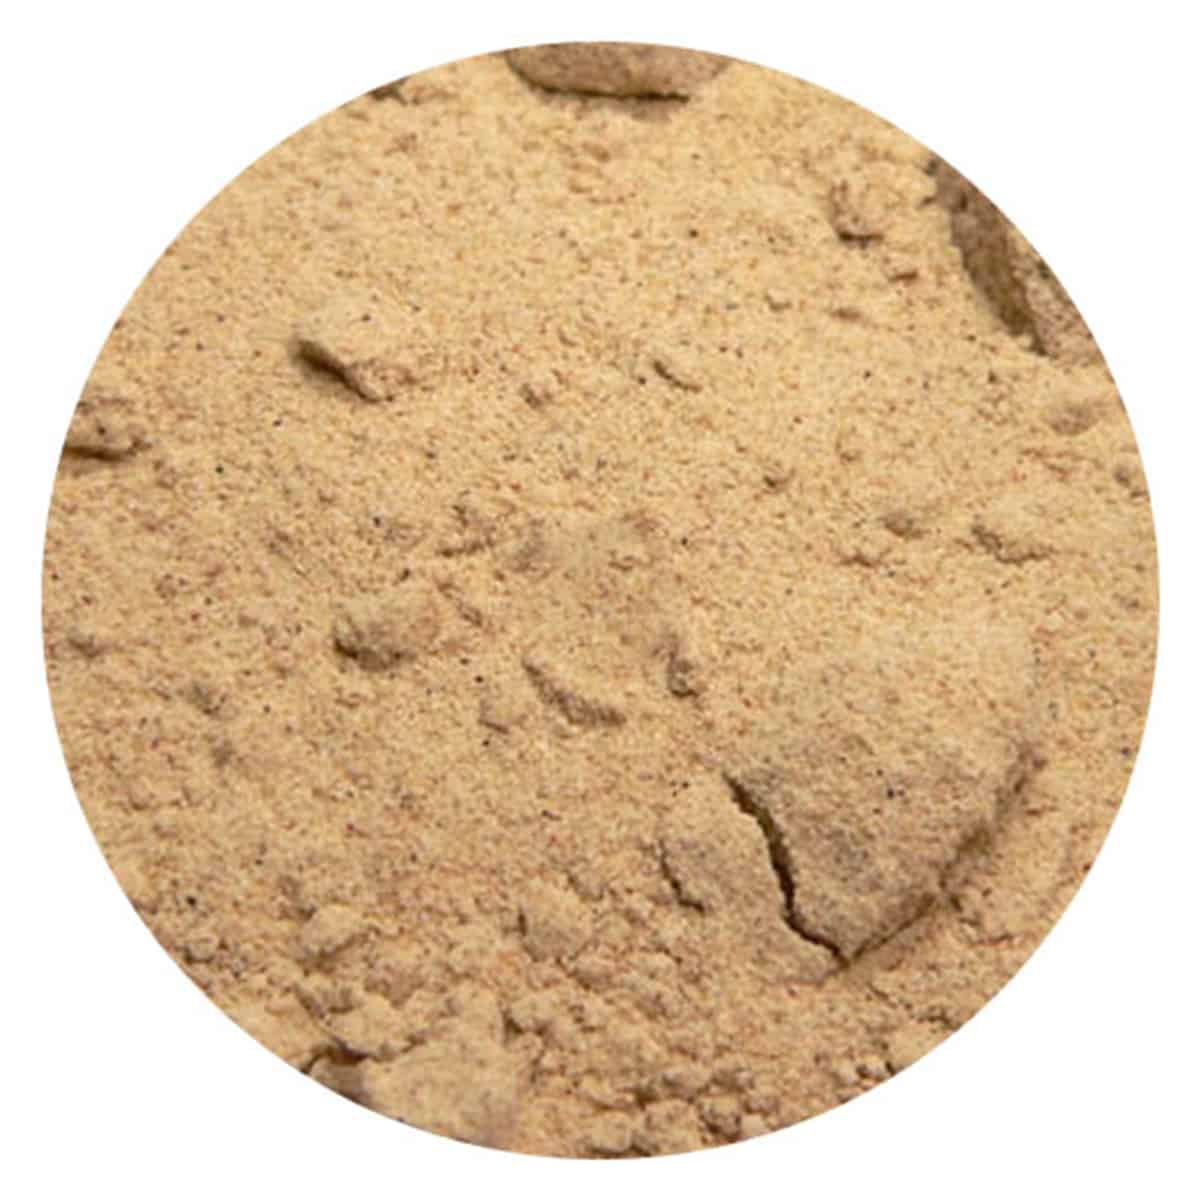 Buy IAG Foods Asafoetida Powder (Hing Powder) - 1 kg